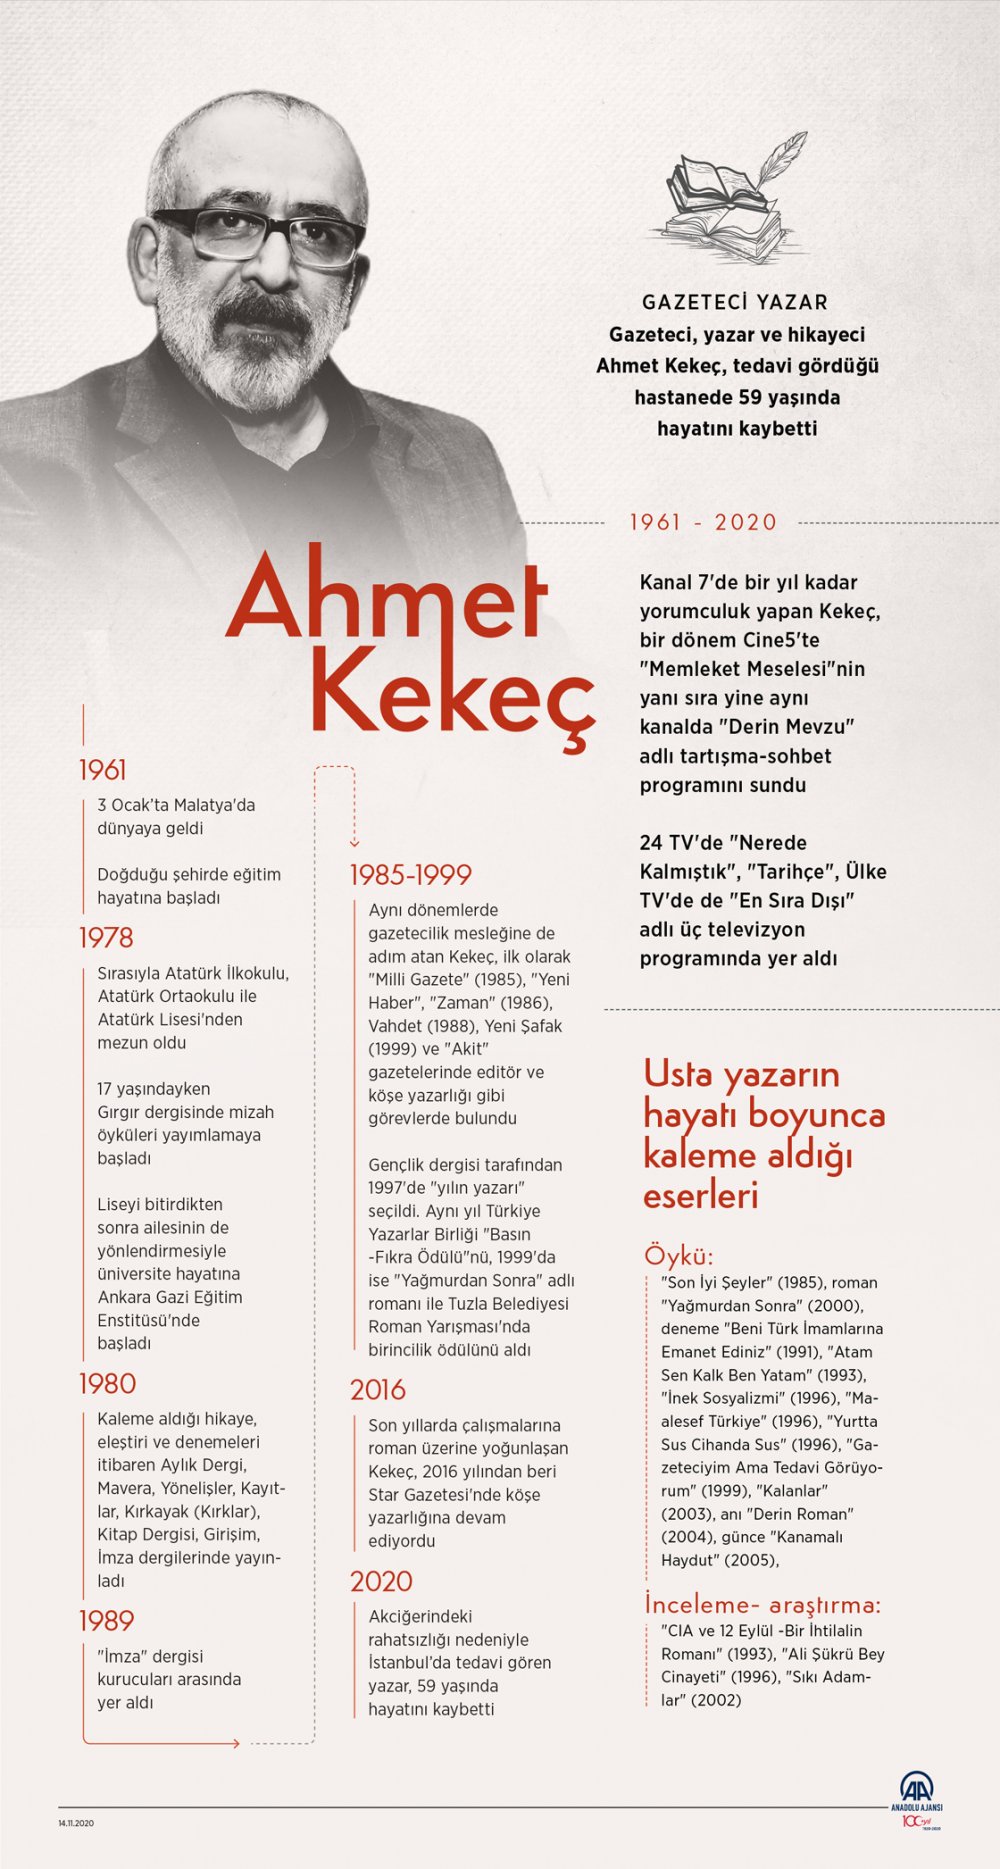 Gazeteci yazar Ahmet Kekeç vefat etti